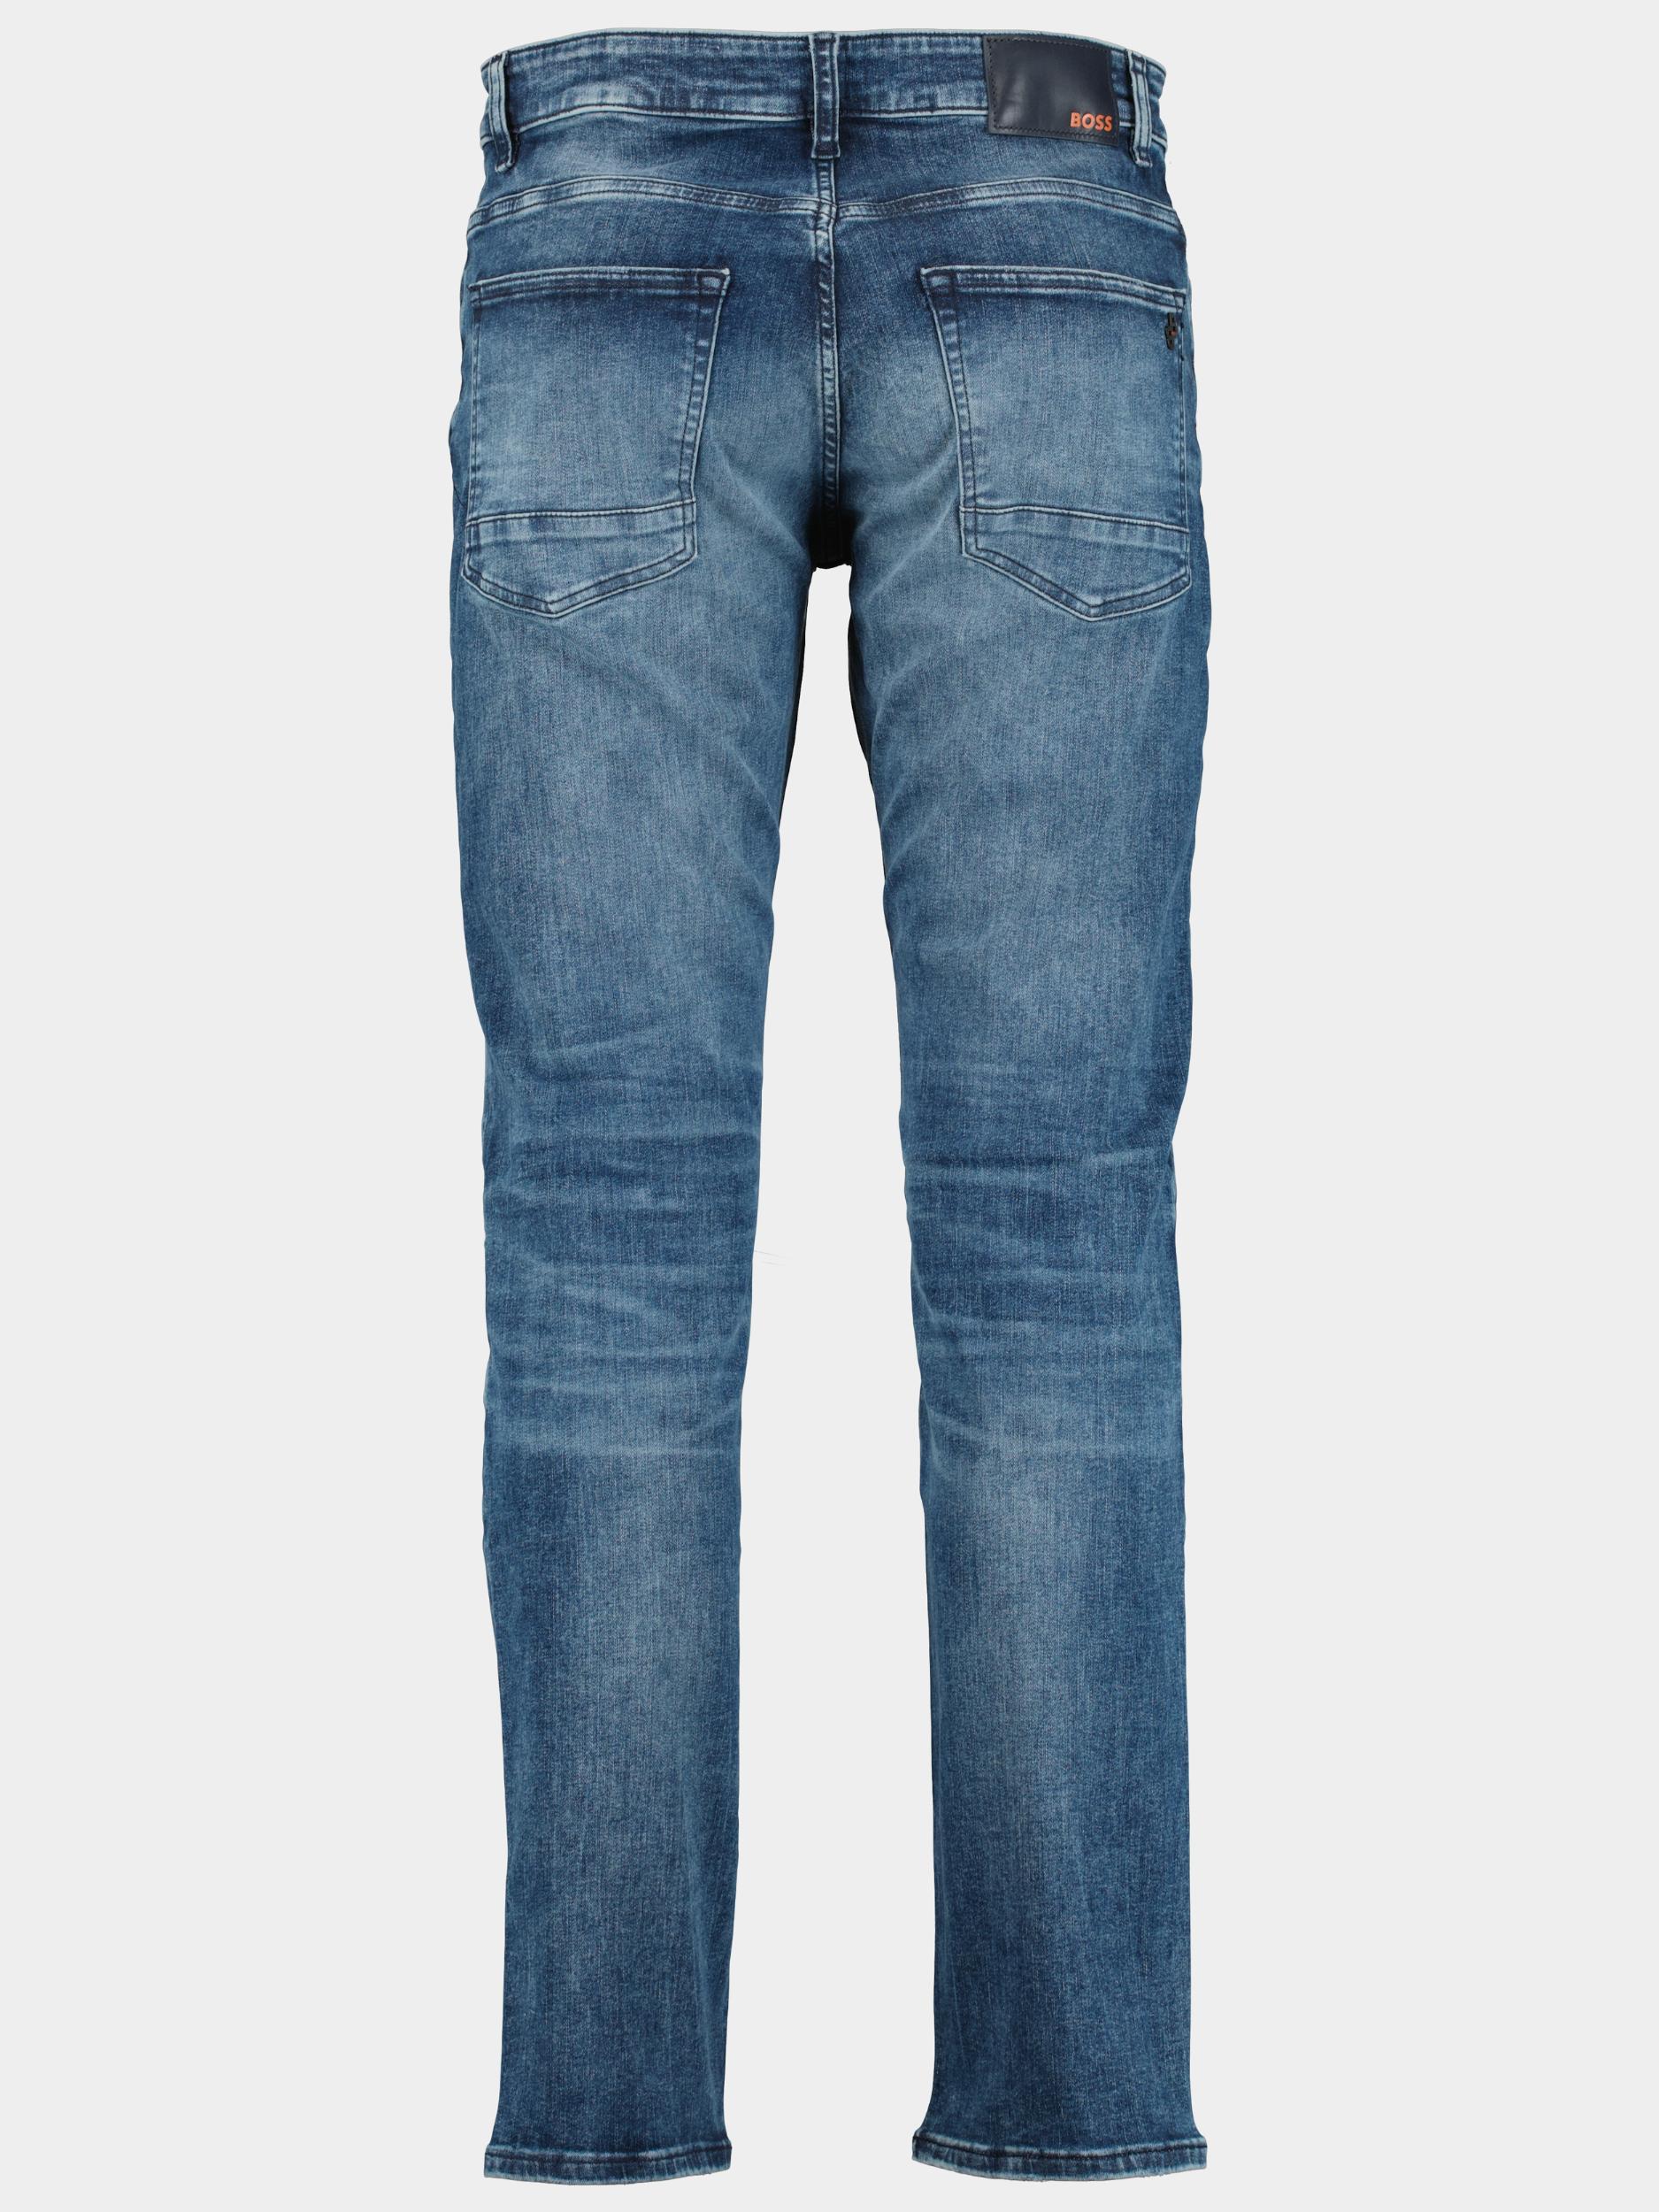 BOSS Orange 5-Pocket Jeans Blauw Delaware BC-P 10253772 01 50502264/420